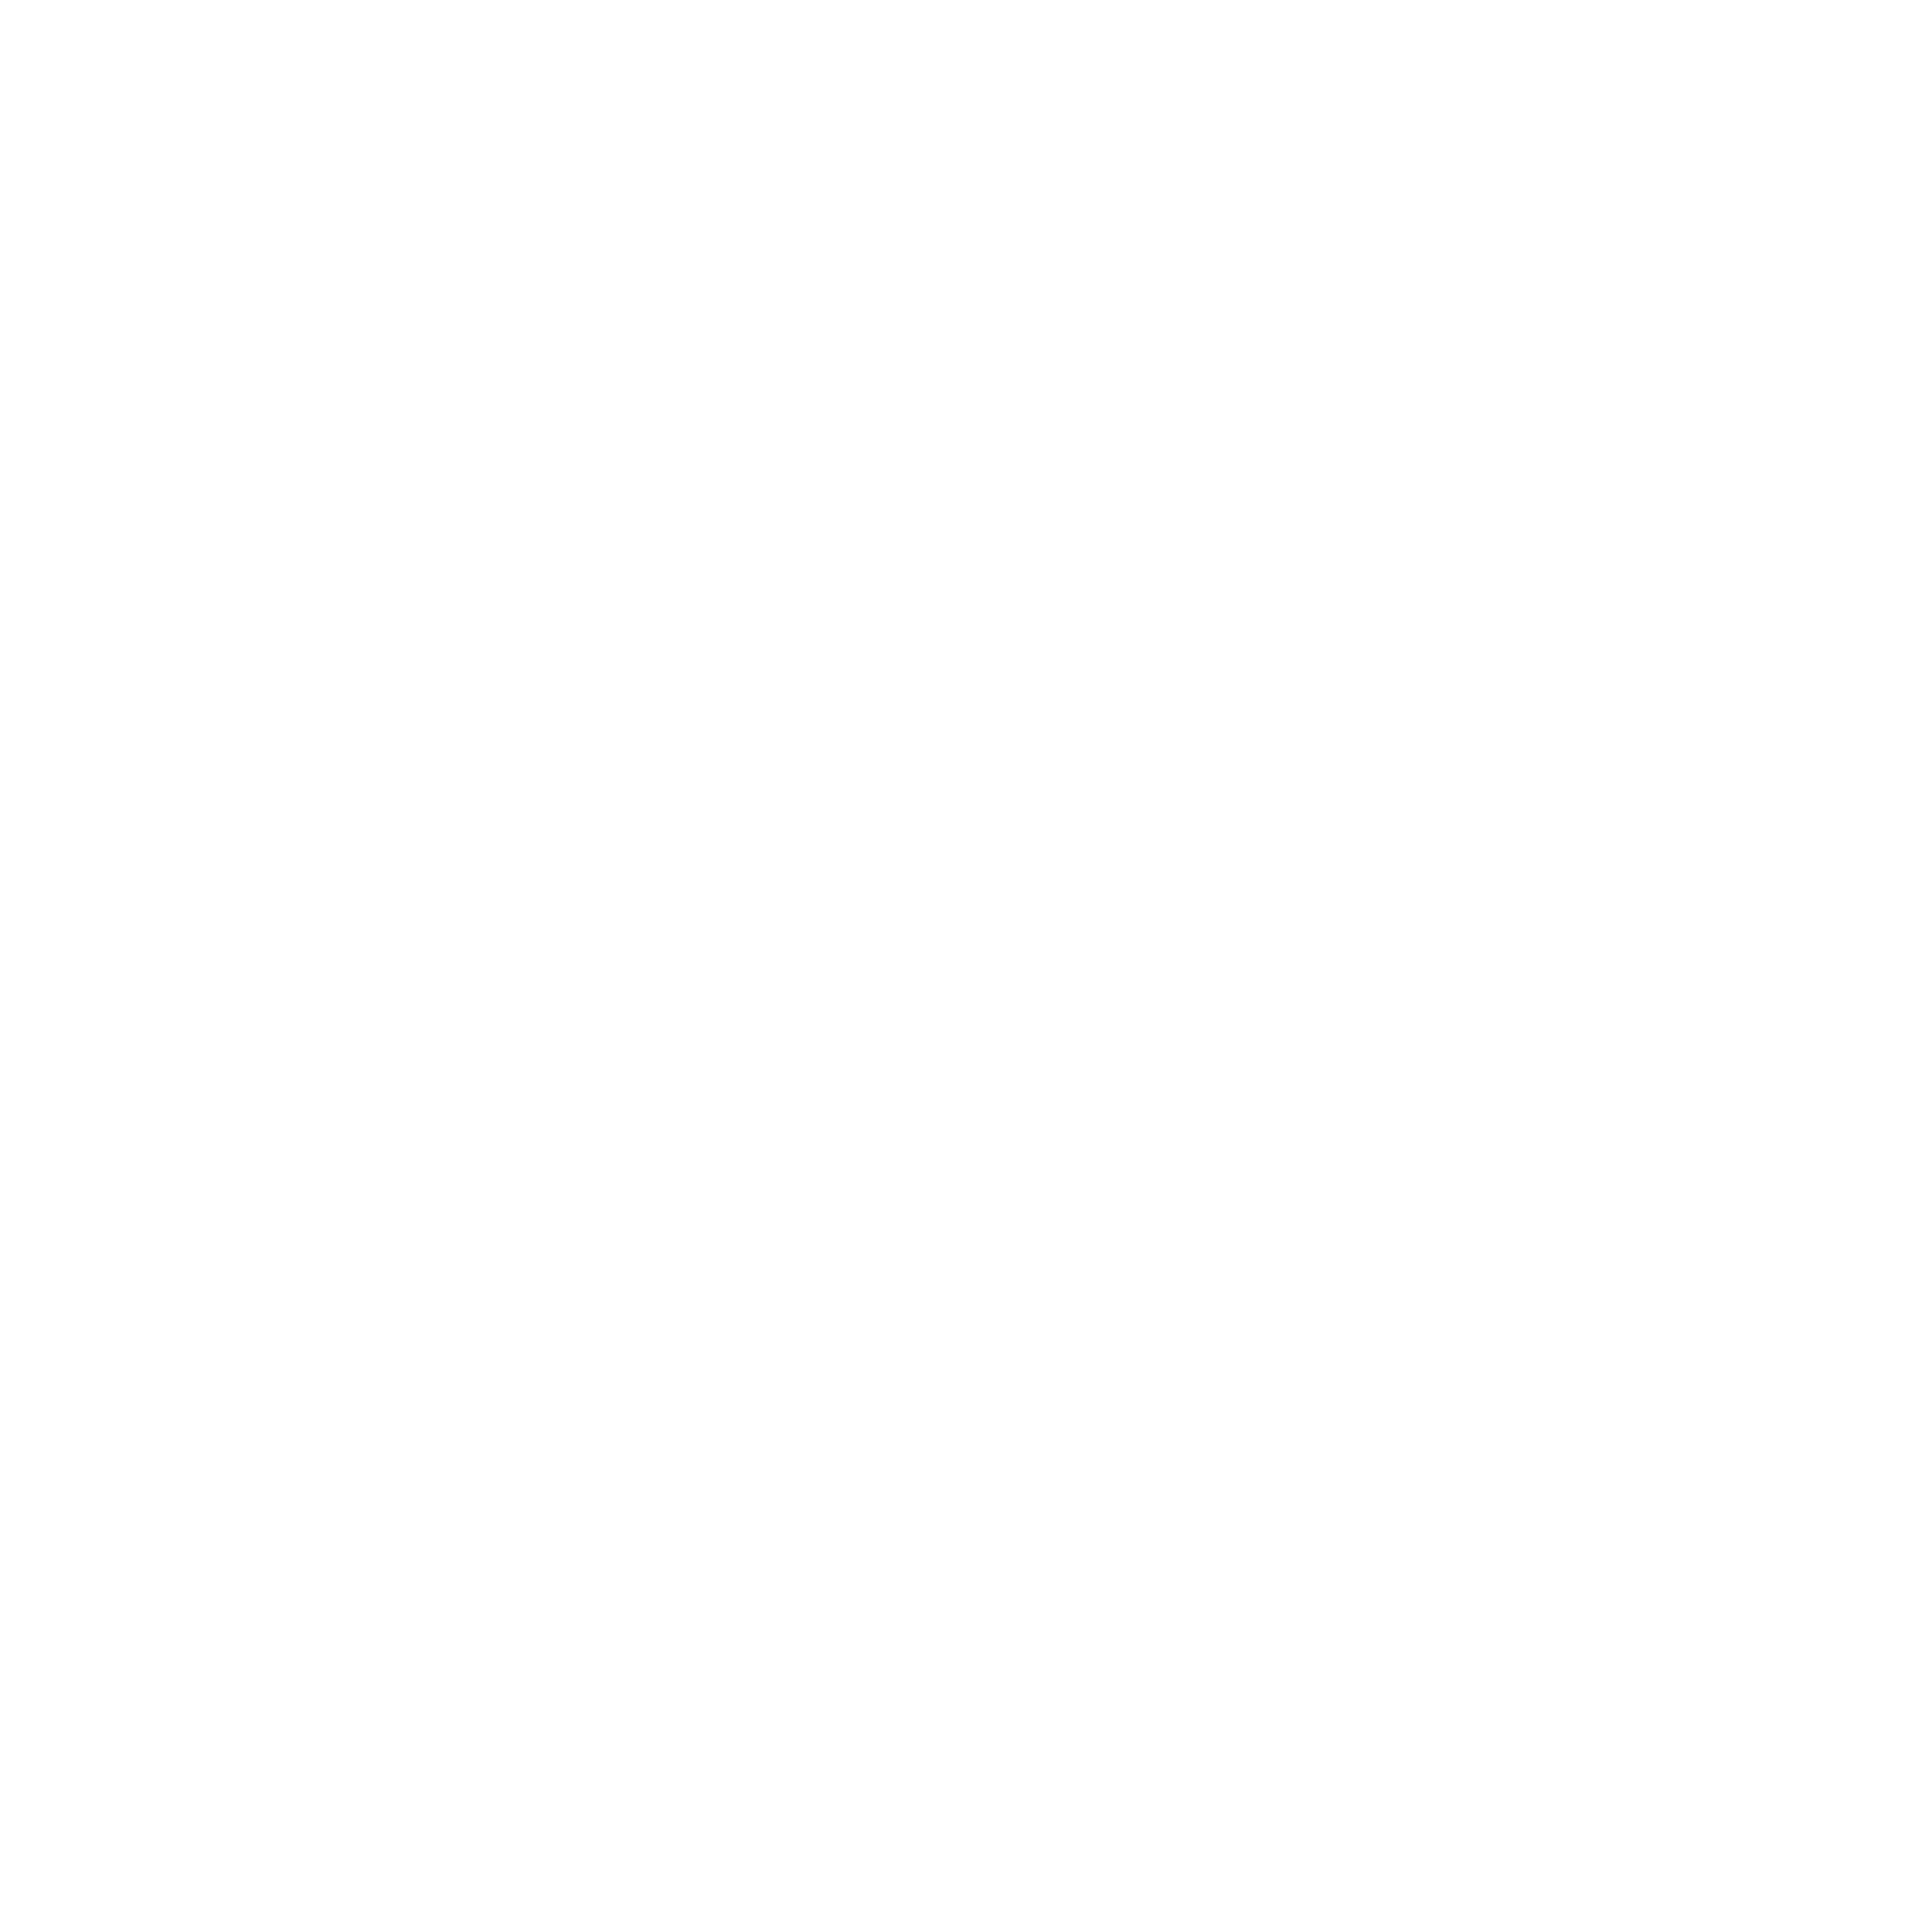 MMatic.coach